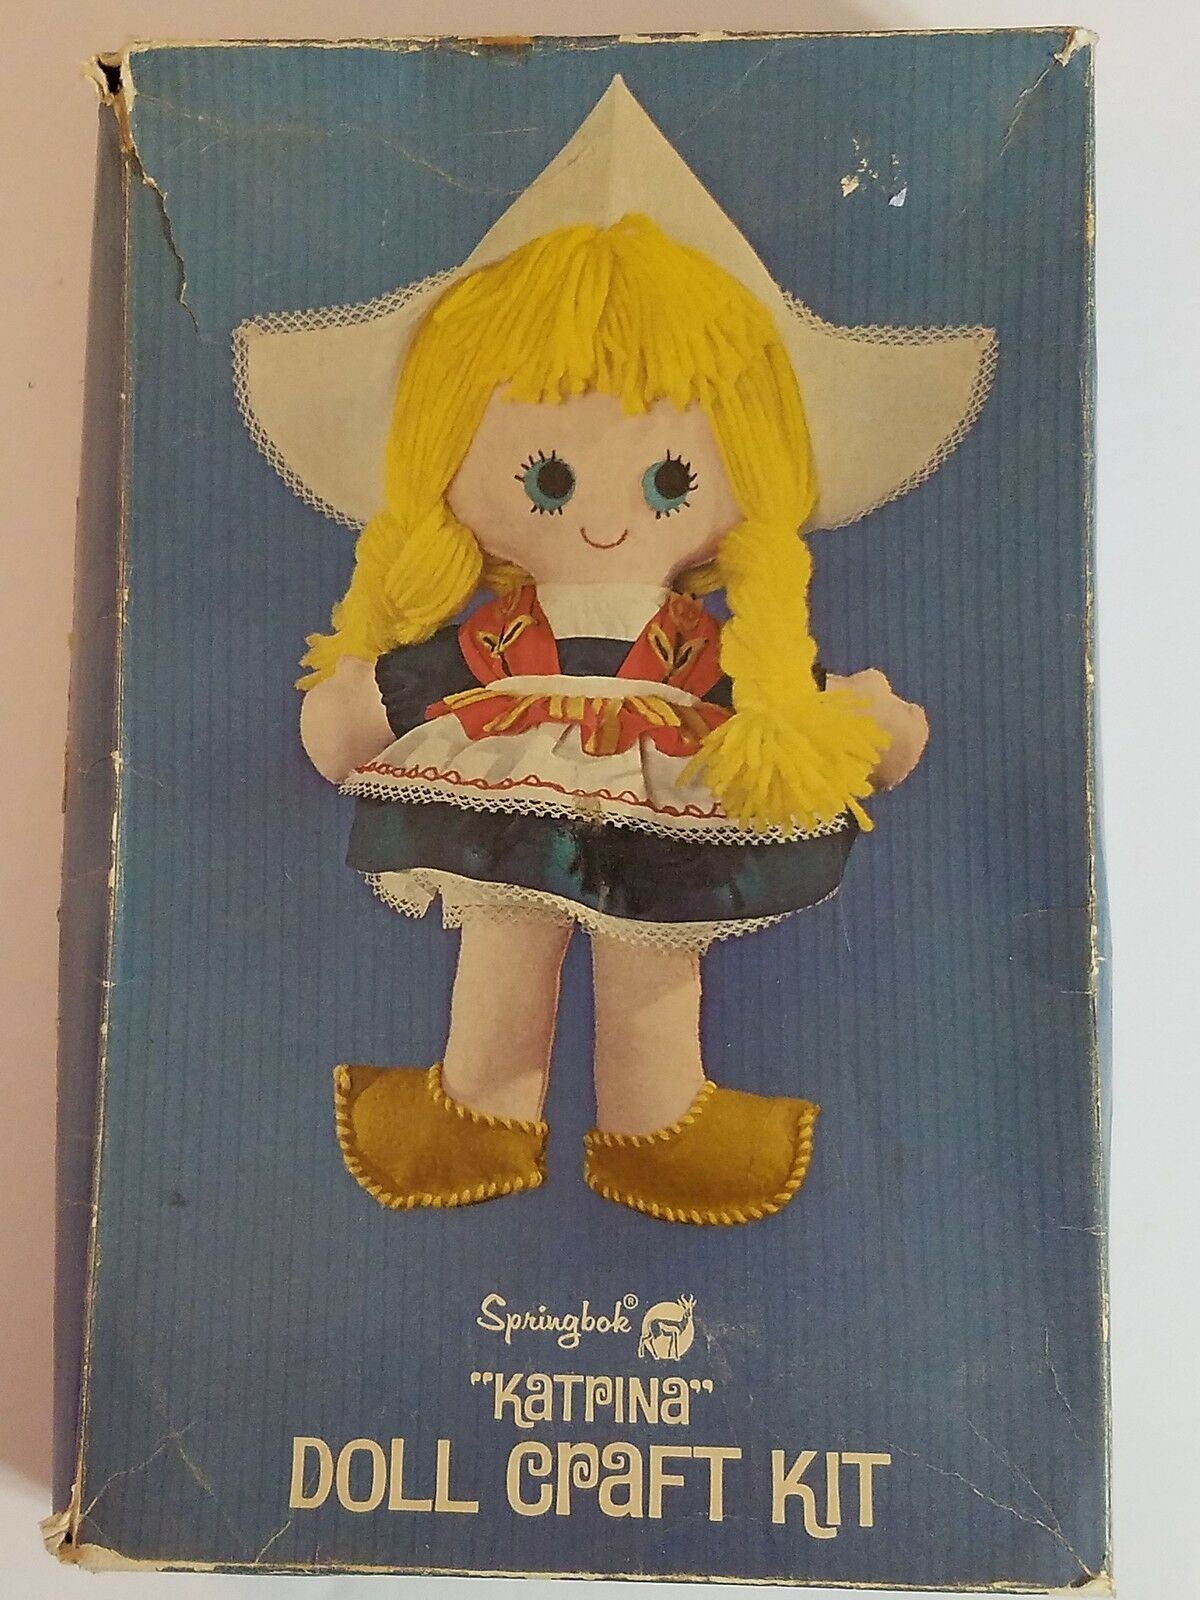 Katrina The Dutch Doll International Craft Kit Ck 42-4 / 16 1/2" Tall 1970